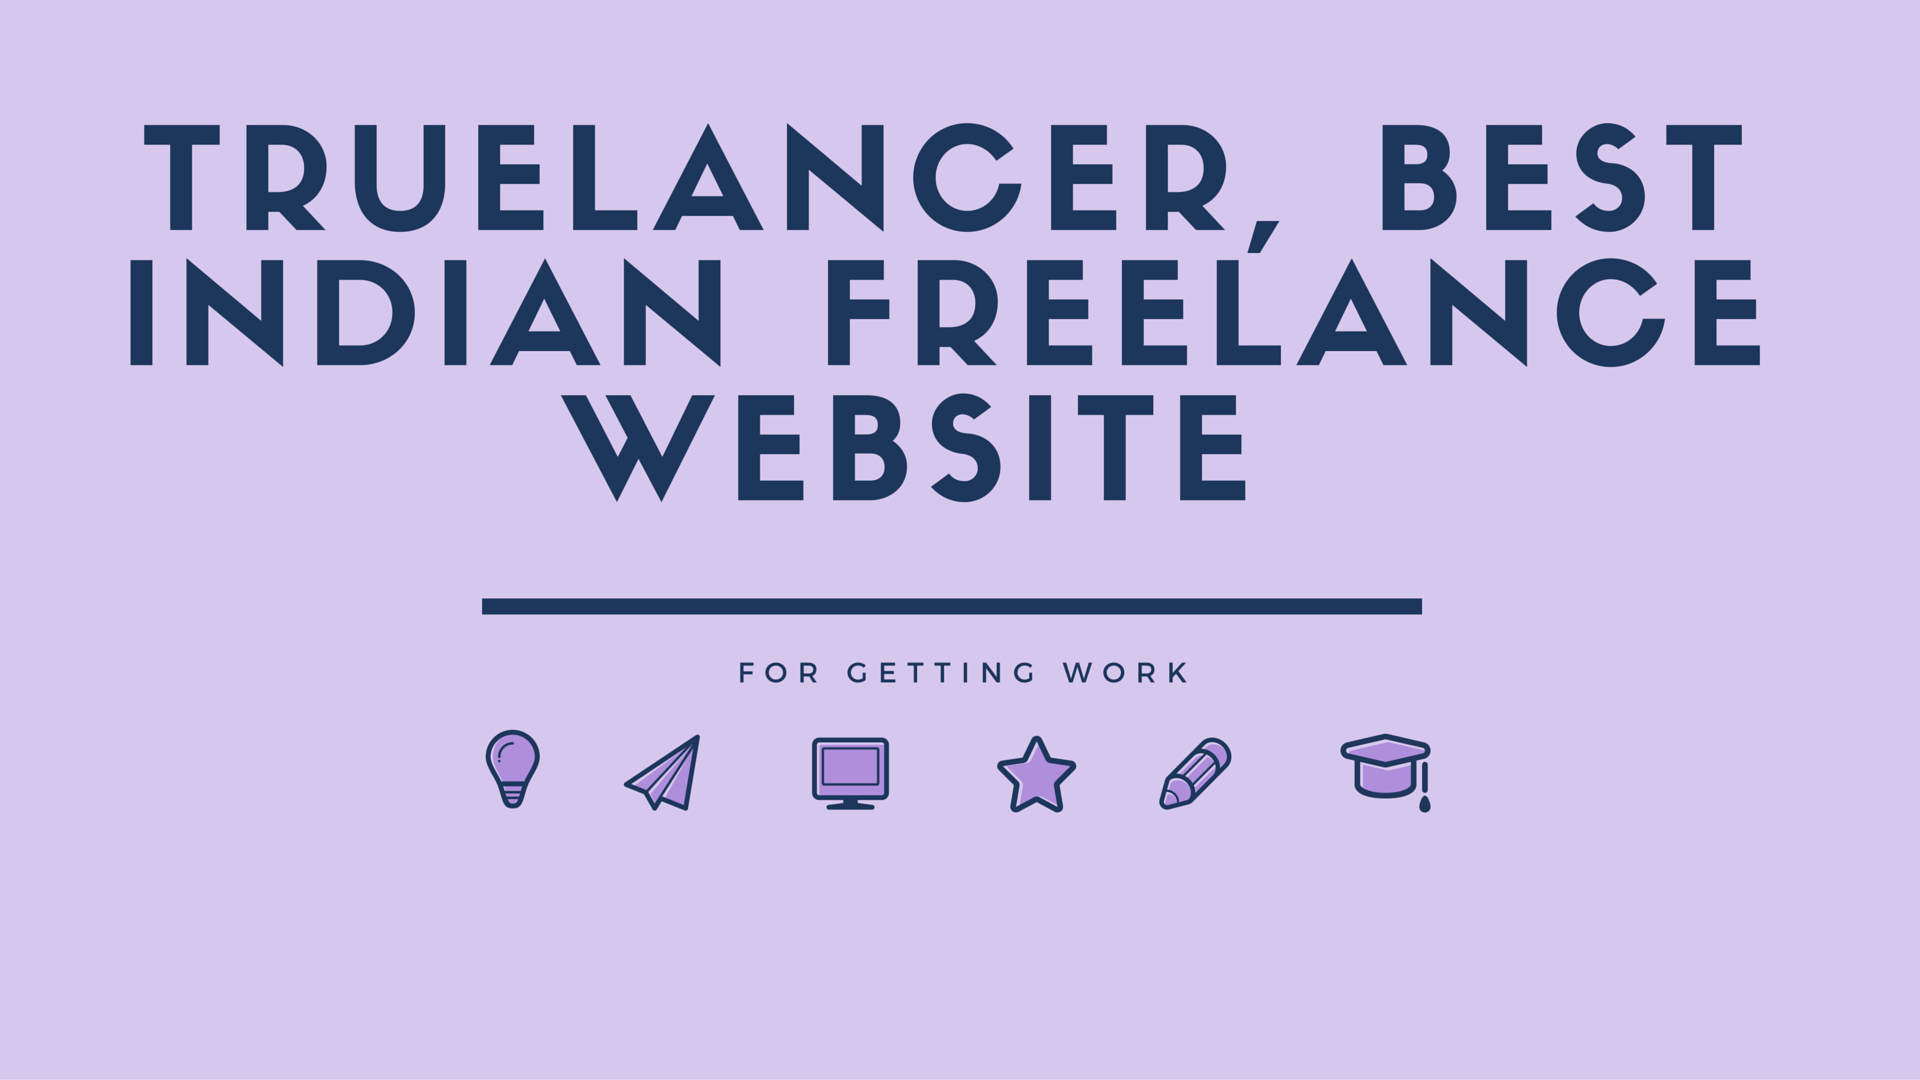 Indian freelance website